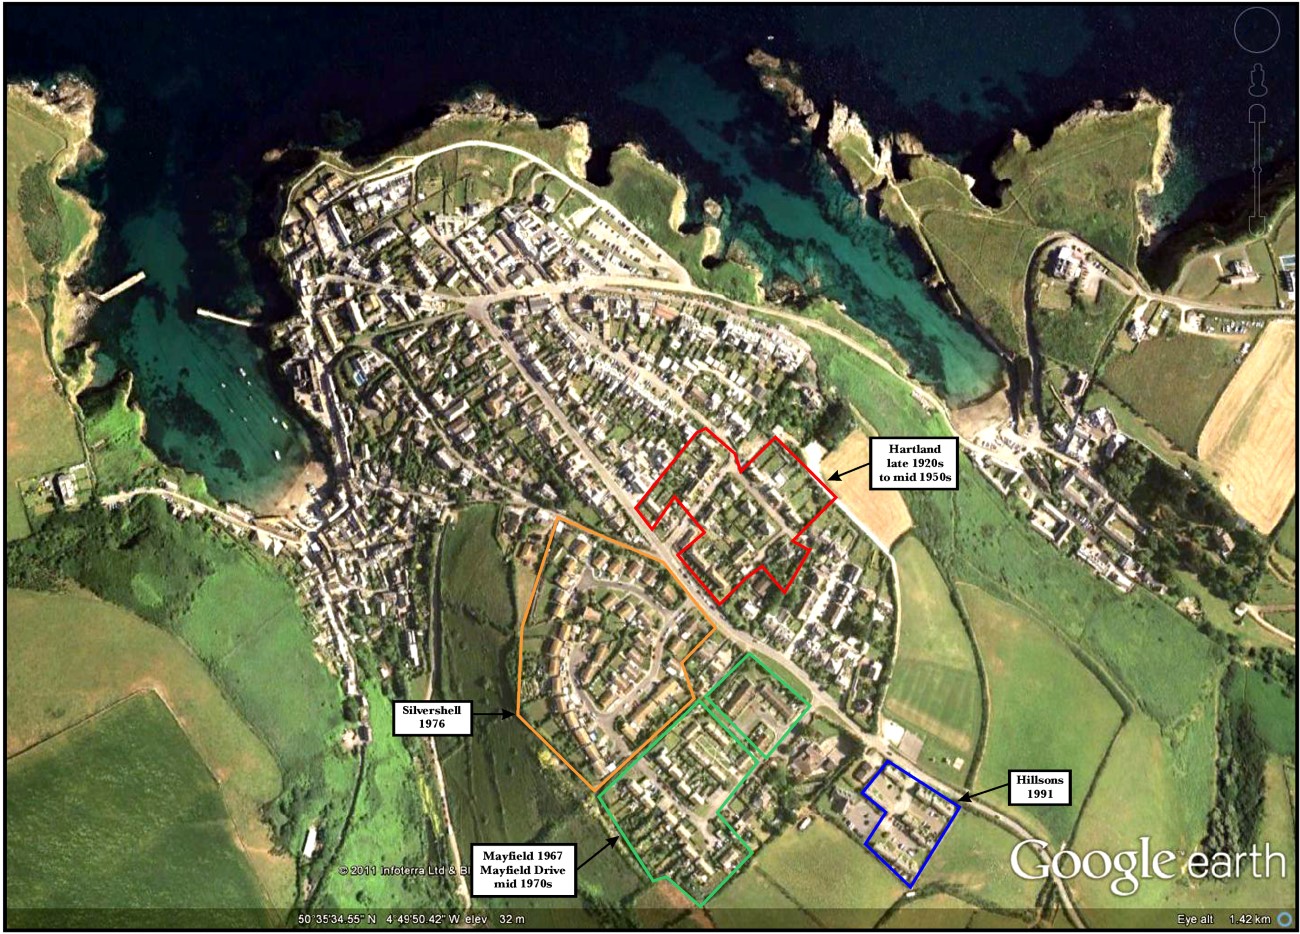 Port Isaac & Port Gaverne - modern times